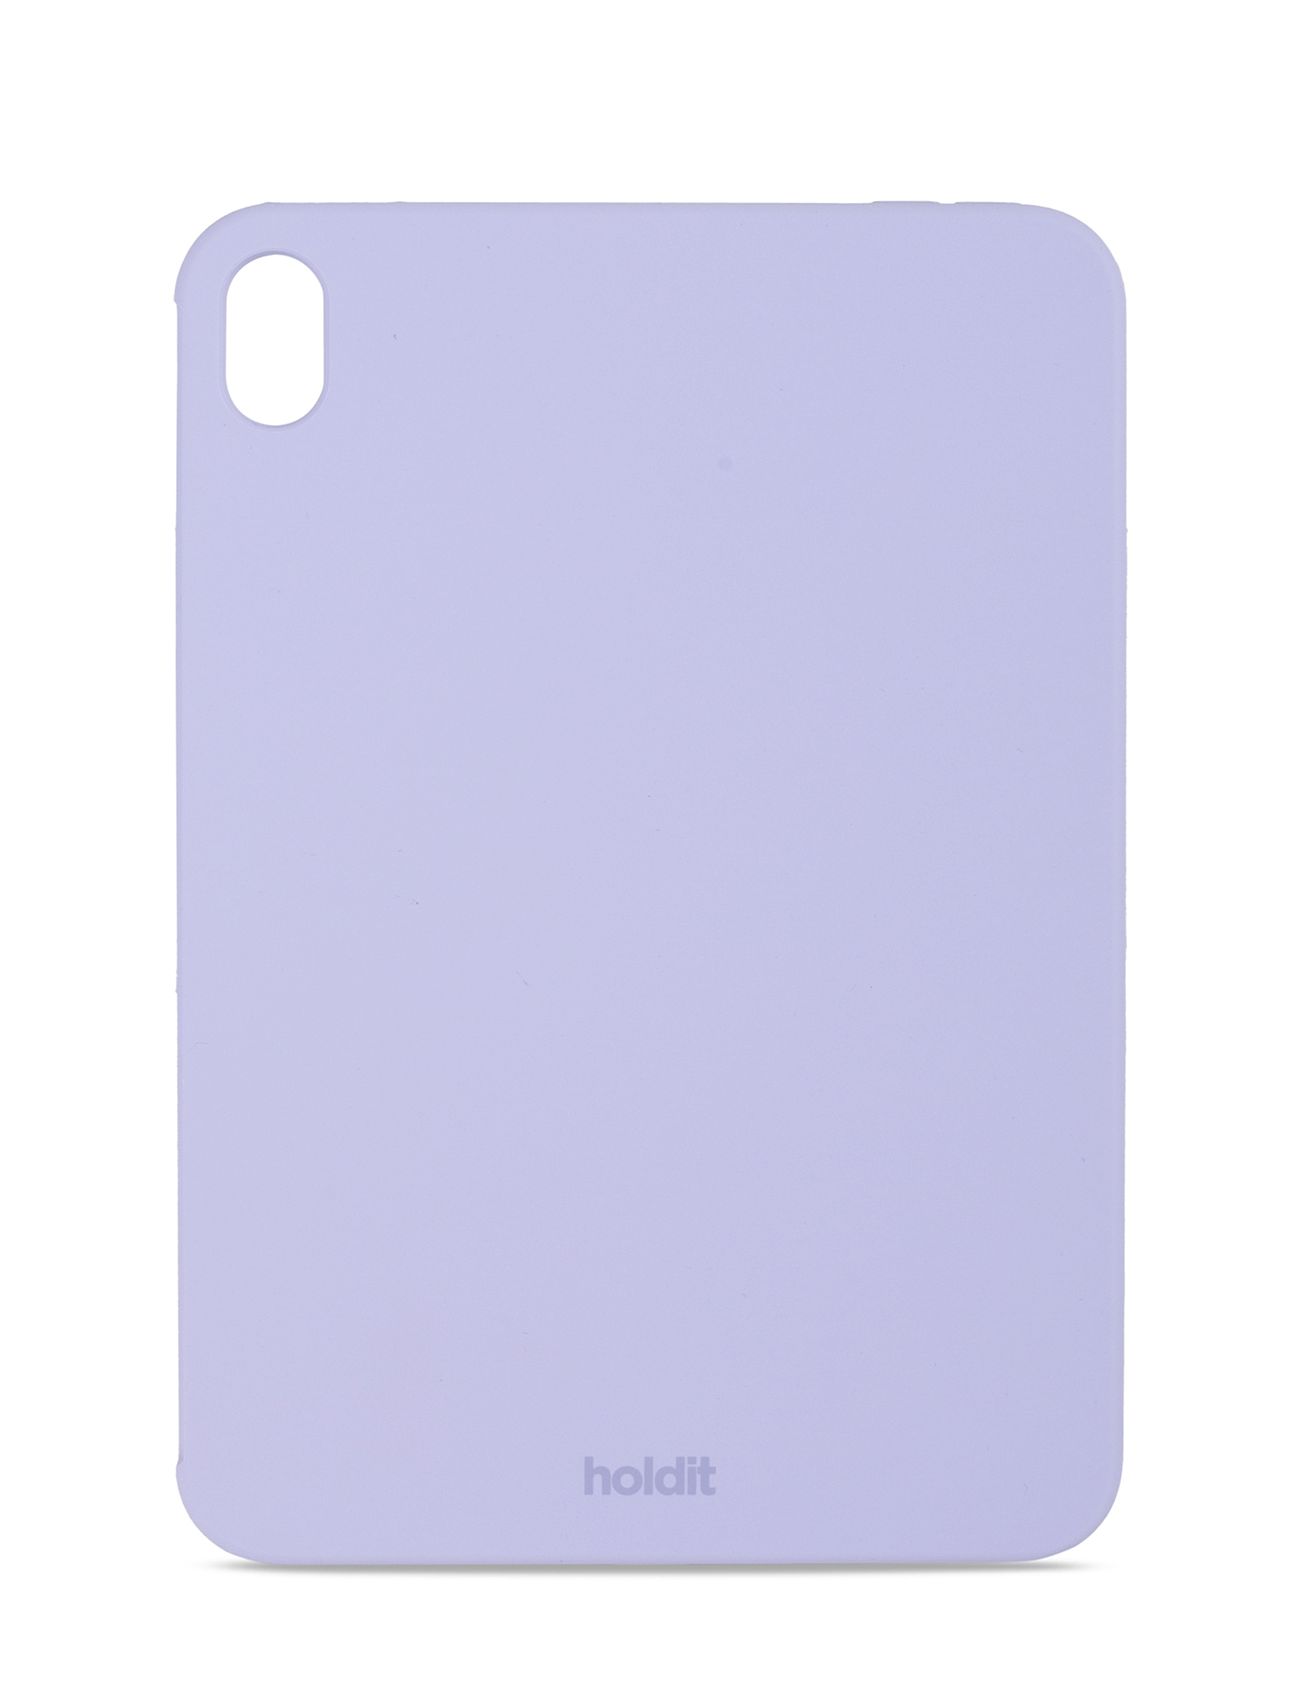 Silic Case Ipad Mini 8.3 Mobilaccessory-covers Tablet Cases Purple Holdit